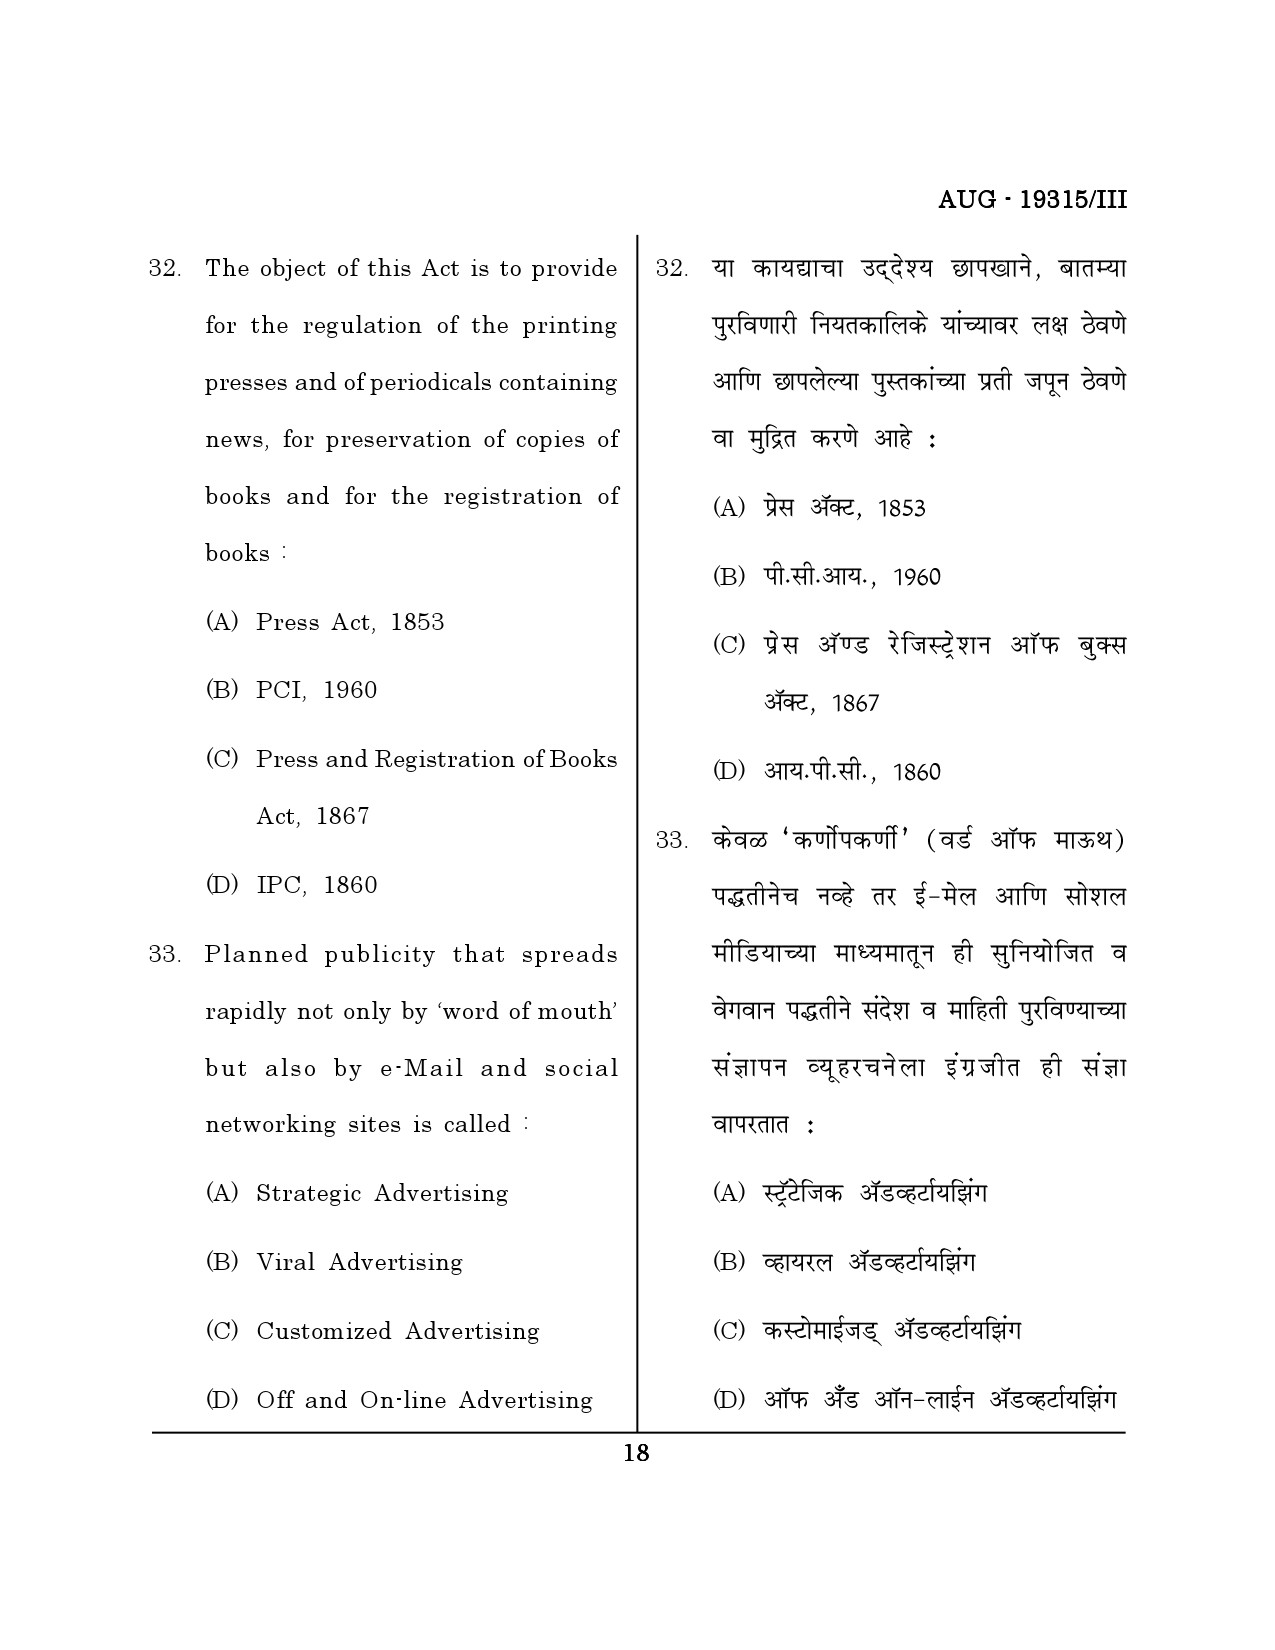 Maharashtra SET Journalism and Mass Communication Question Paper III August 2015 17